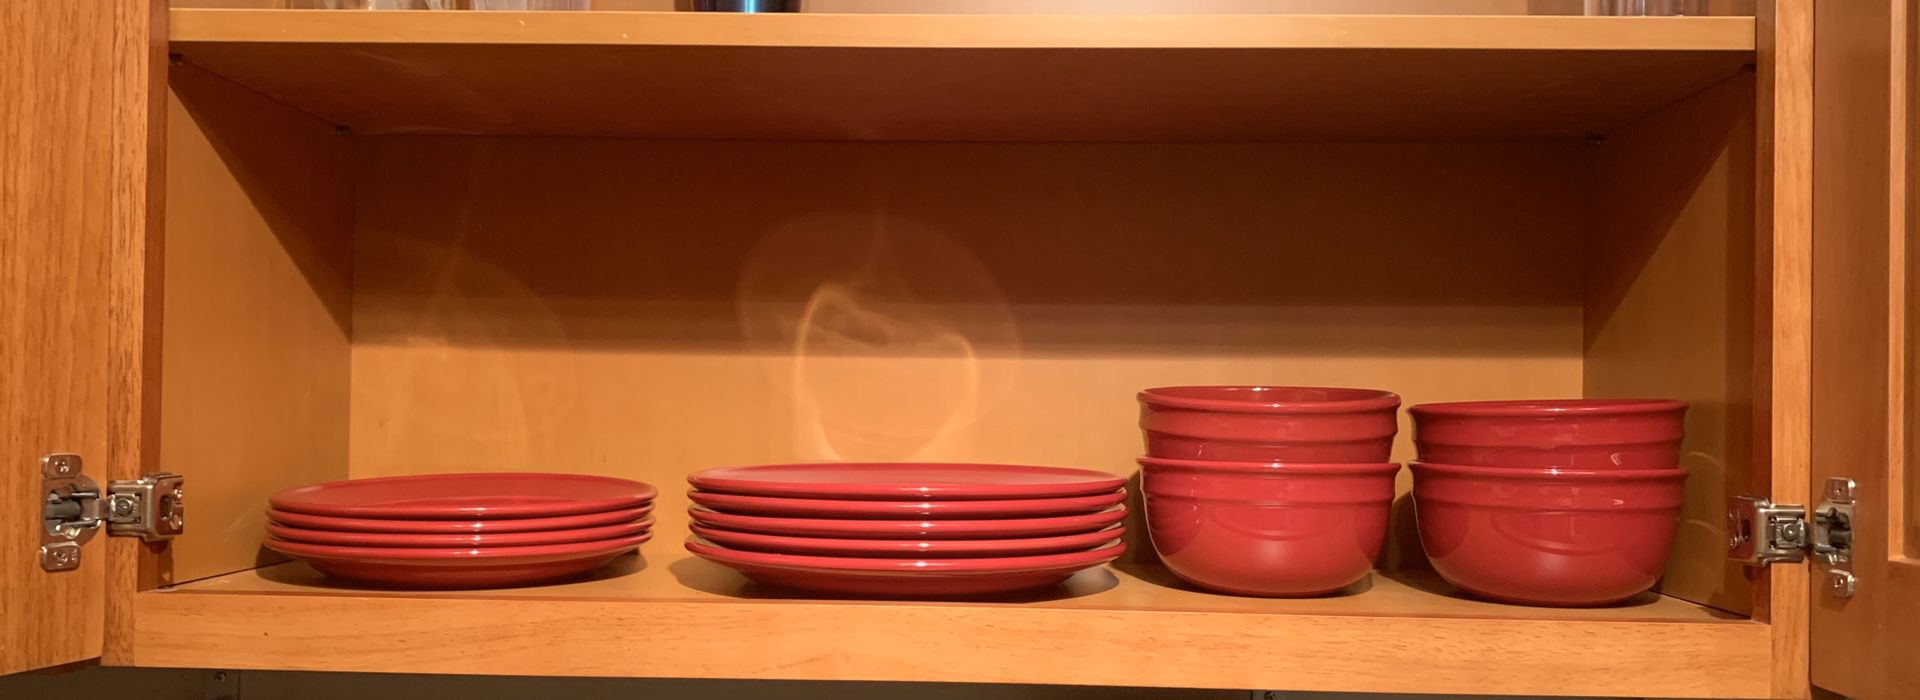 Plates and bowl set